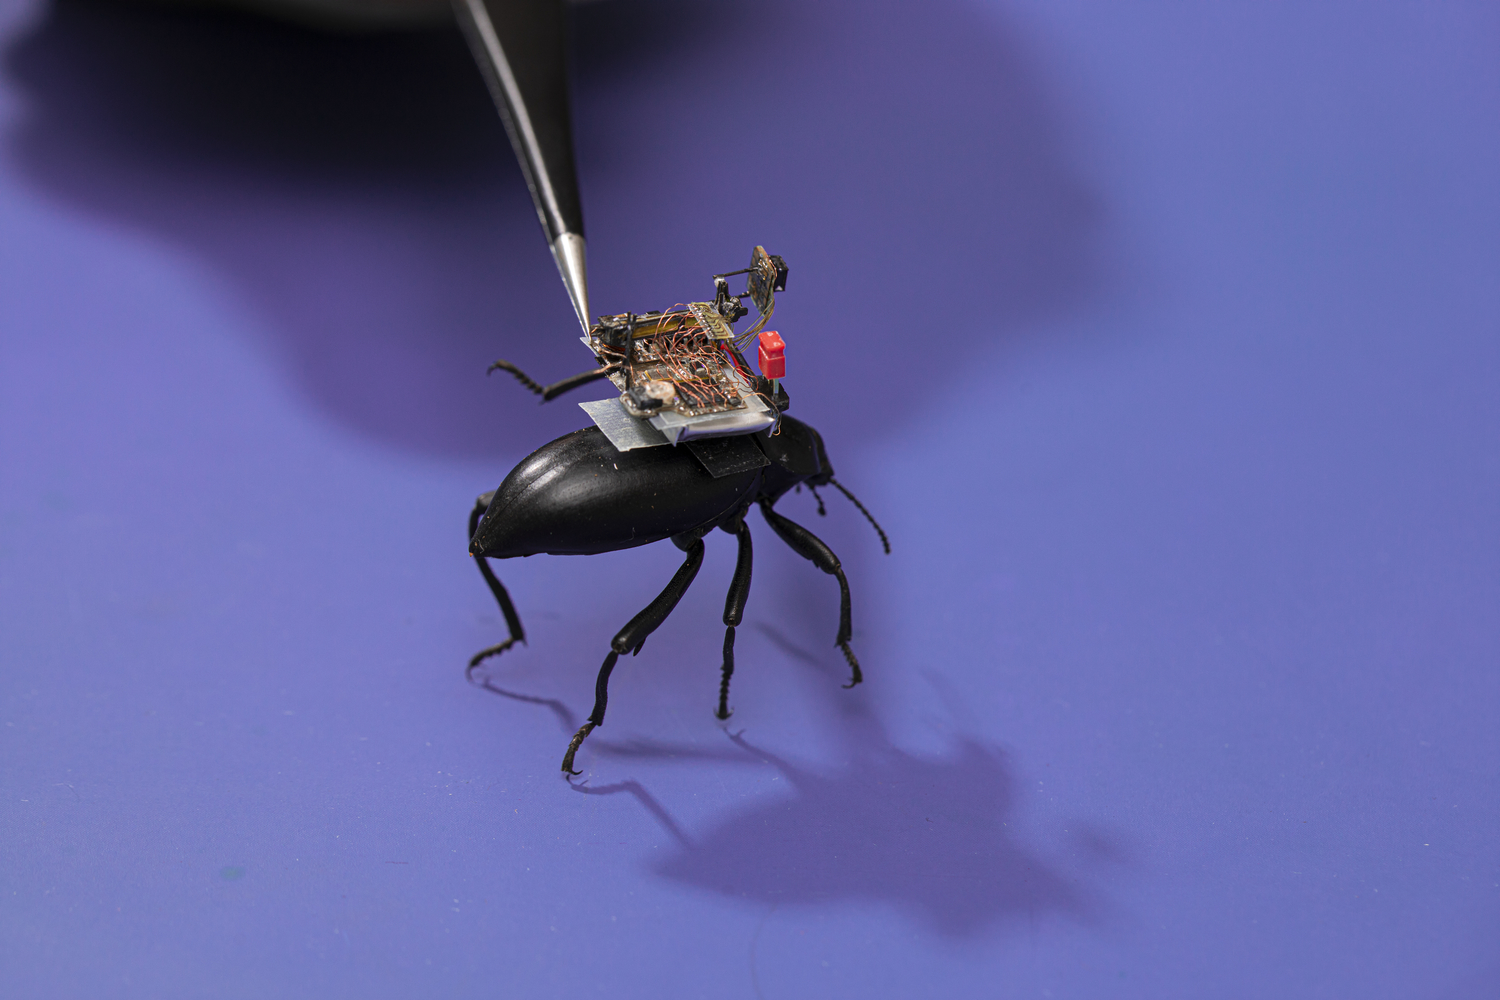 university of washington bug camera vikram and shayam discuss the challenges getting a tiny on beetle